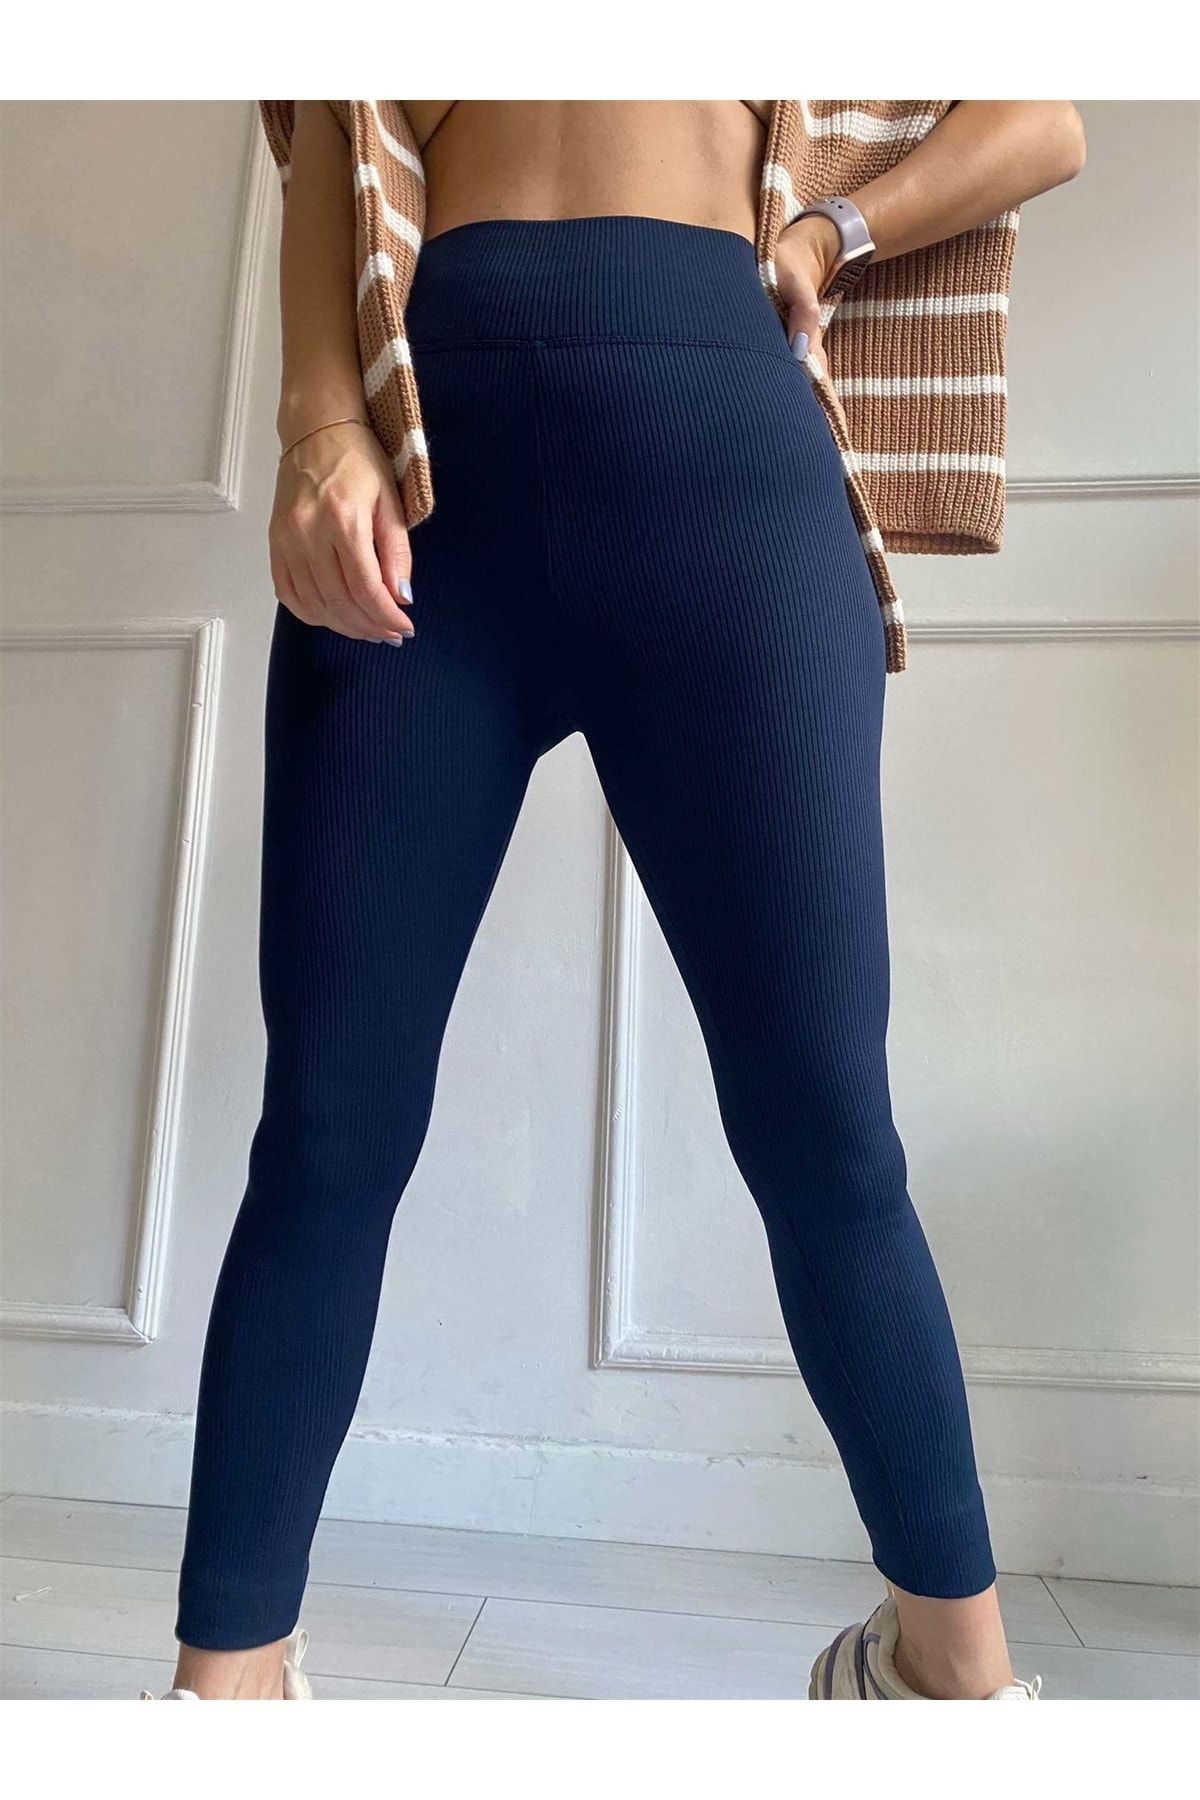 High waist Shaping tights - Dark blue - Ladies